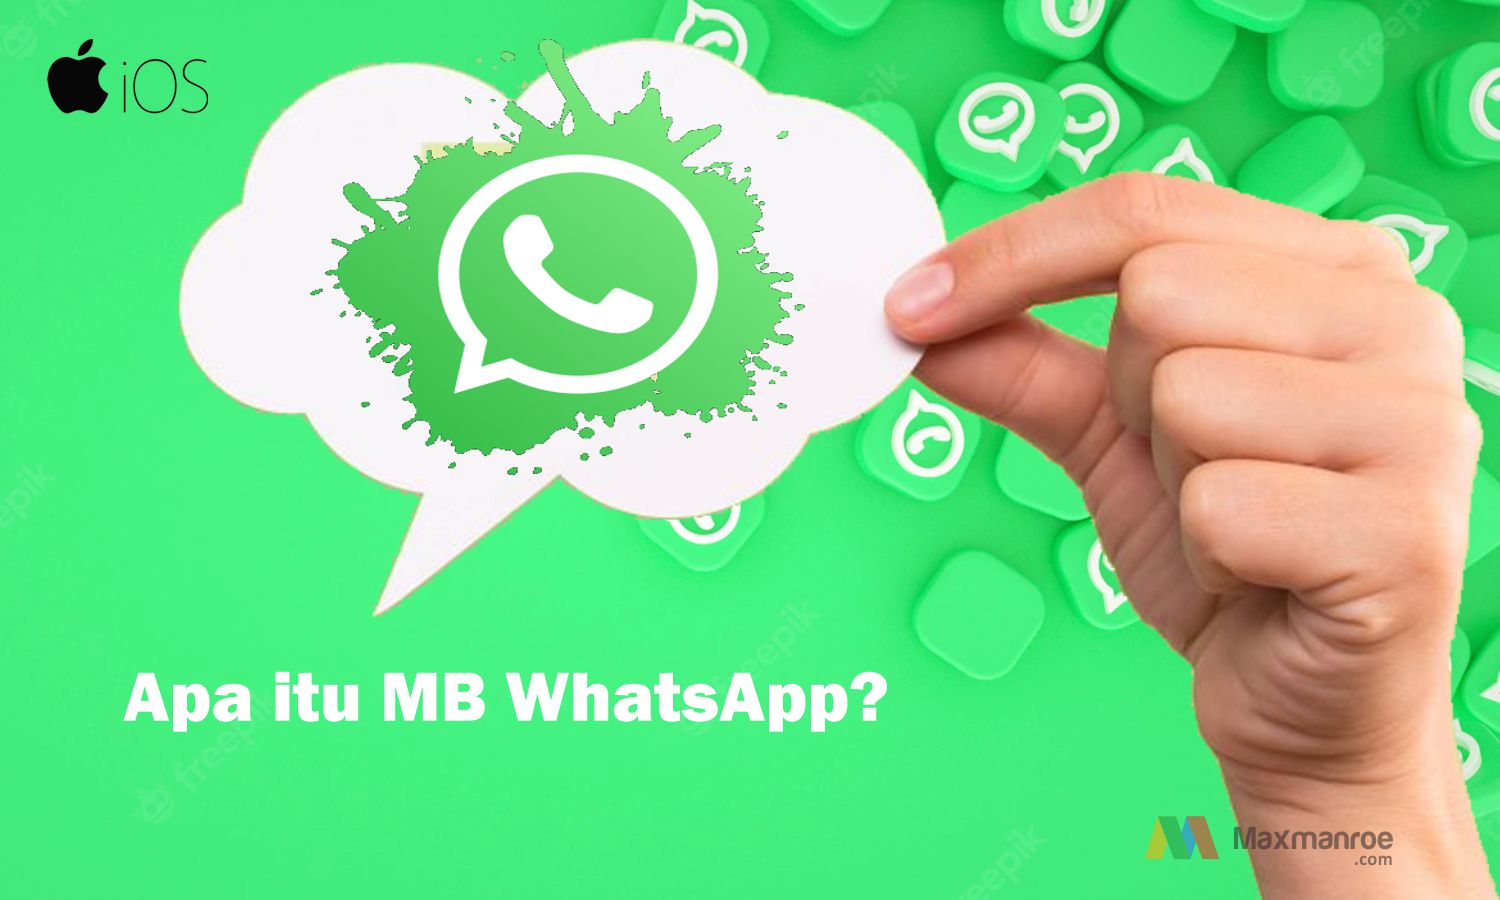 Tentang Mb WhatsApp